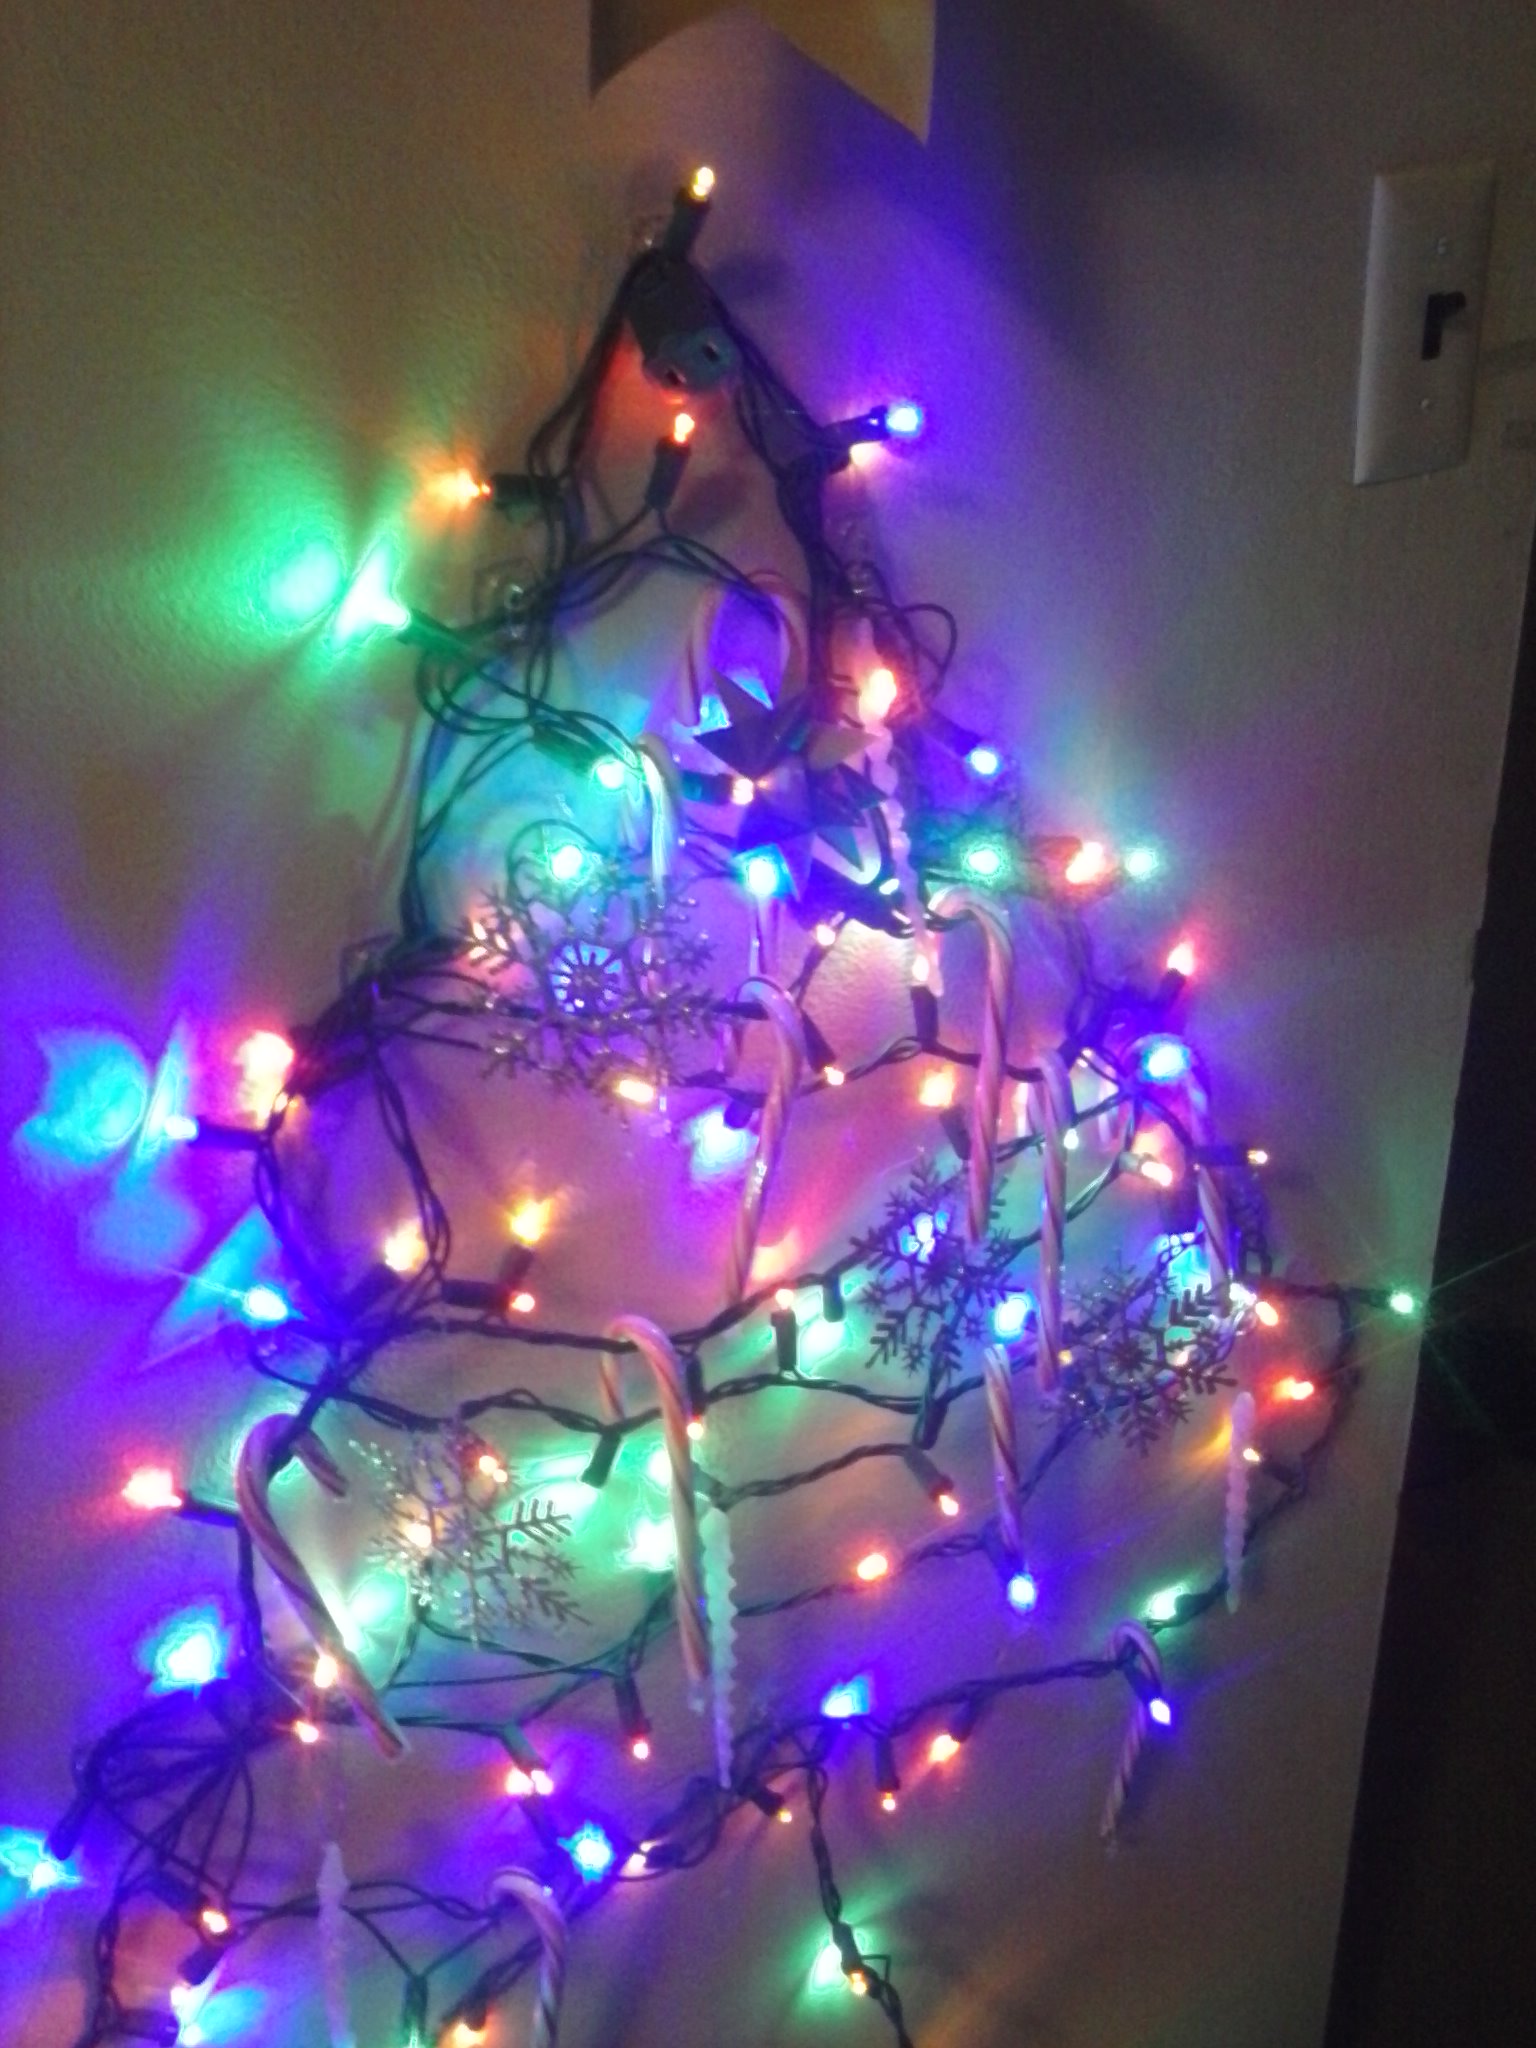 Wall mounted Christmas tree lit up.